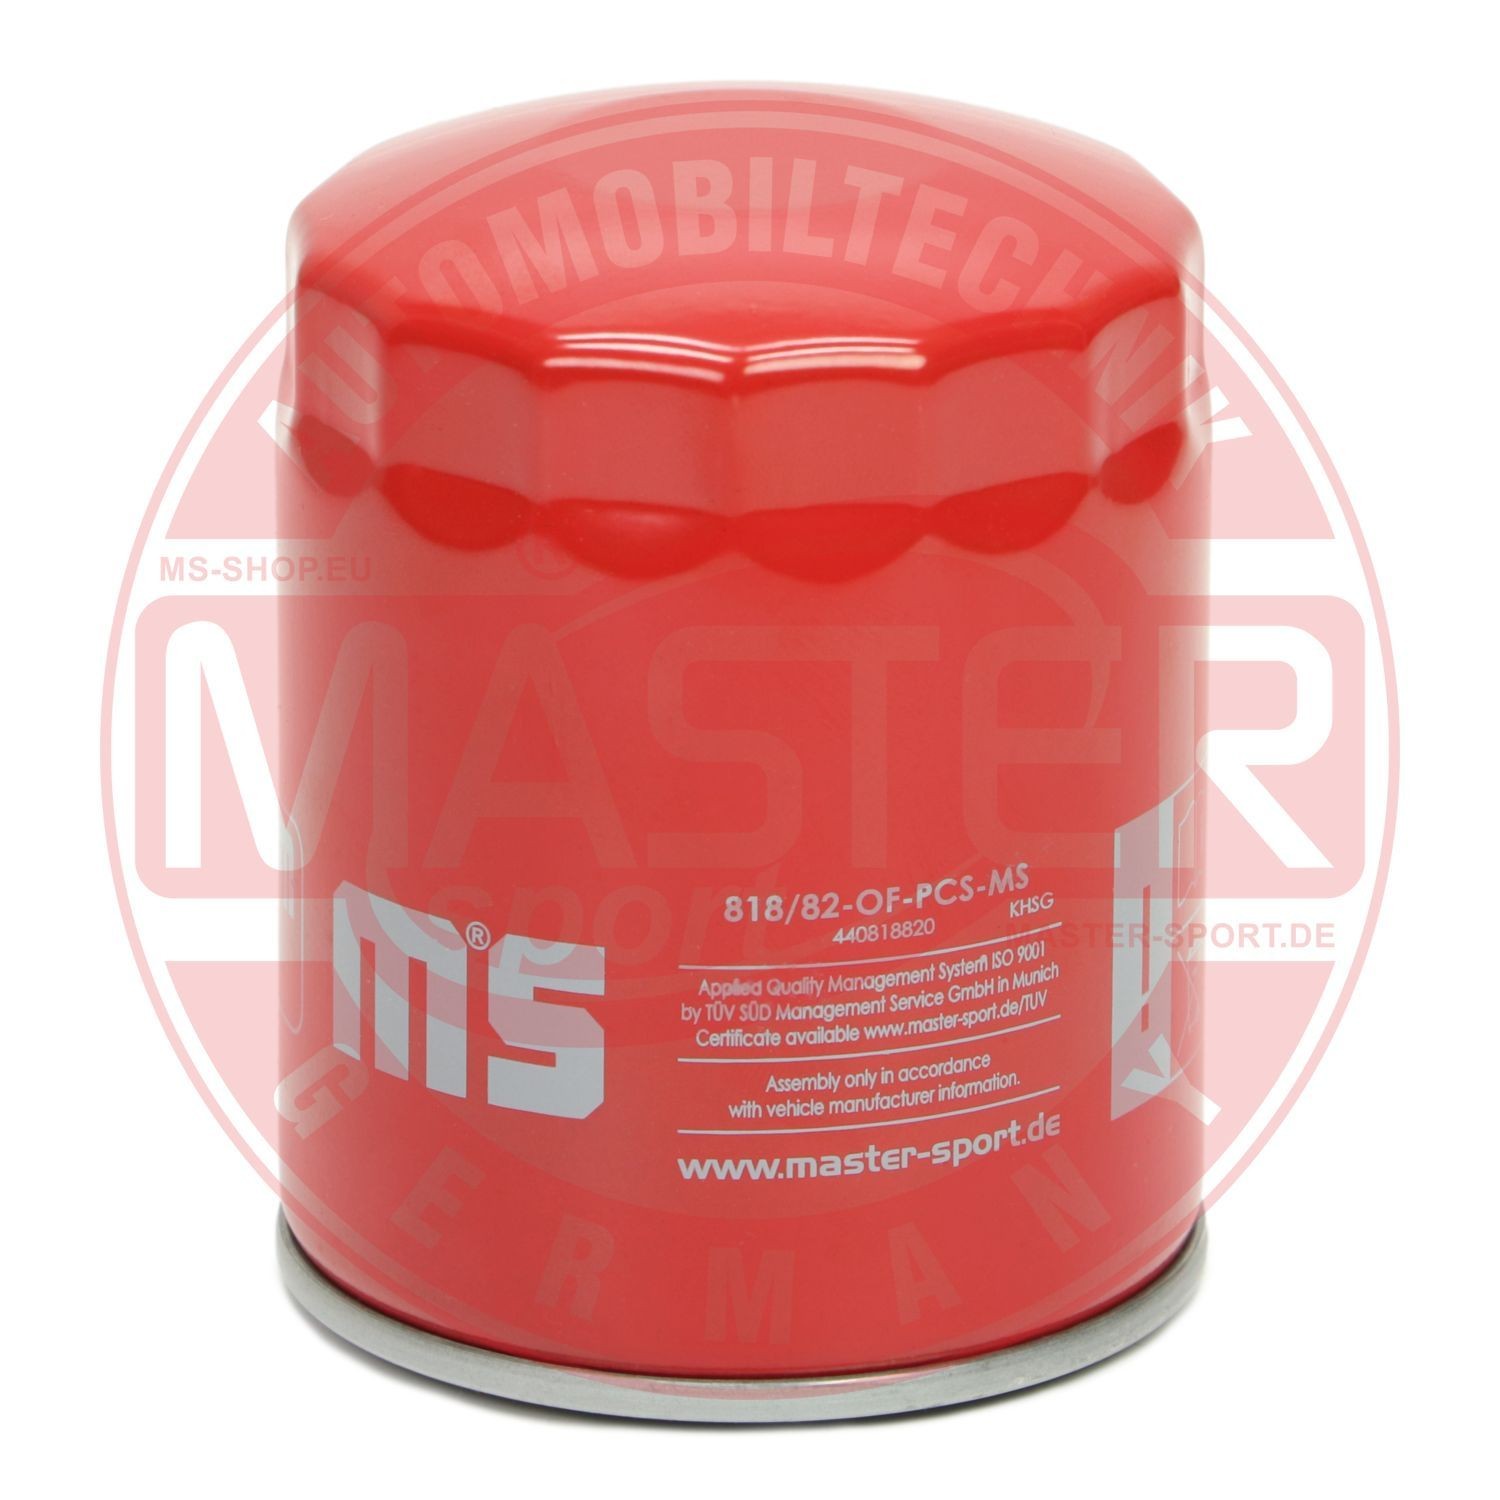 440818820 MASTER-SPORT 818/82-OF-PCS-MS Oil filter 1961451